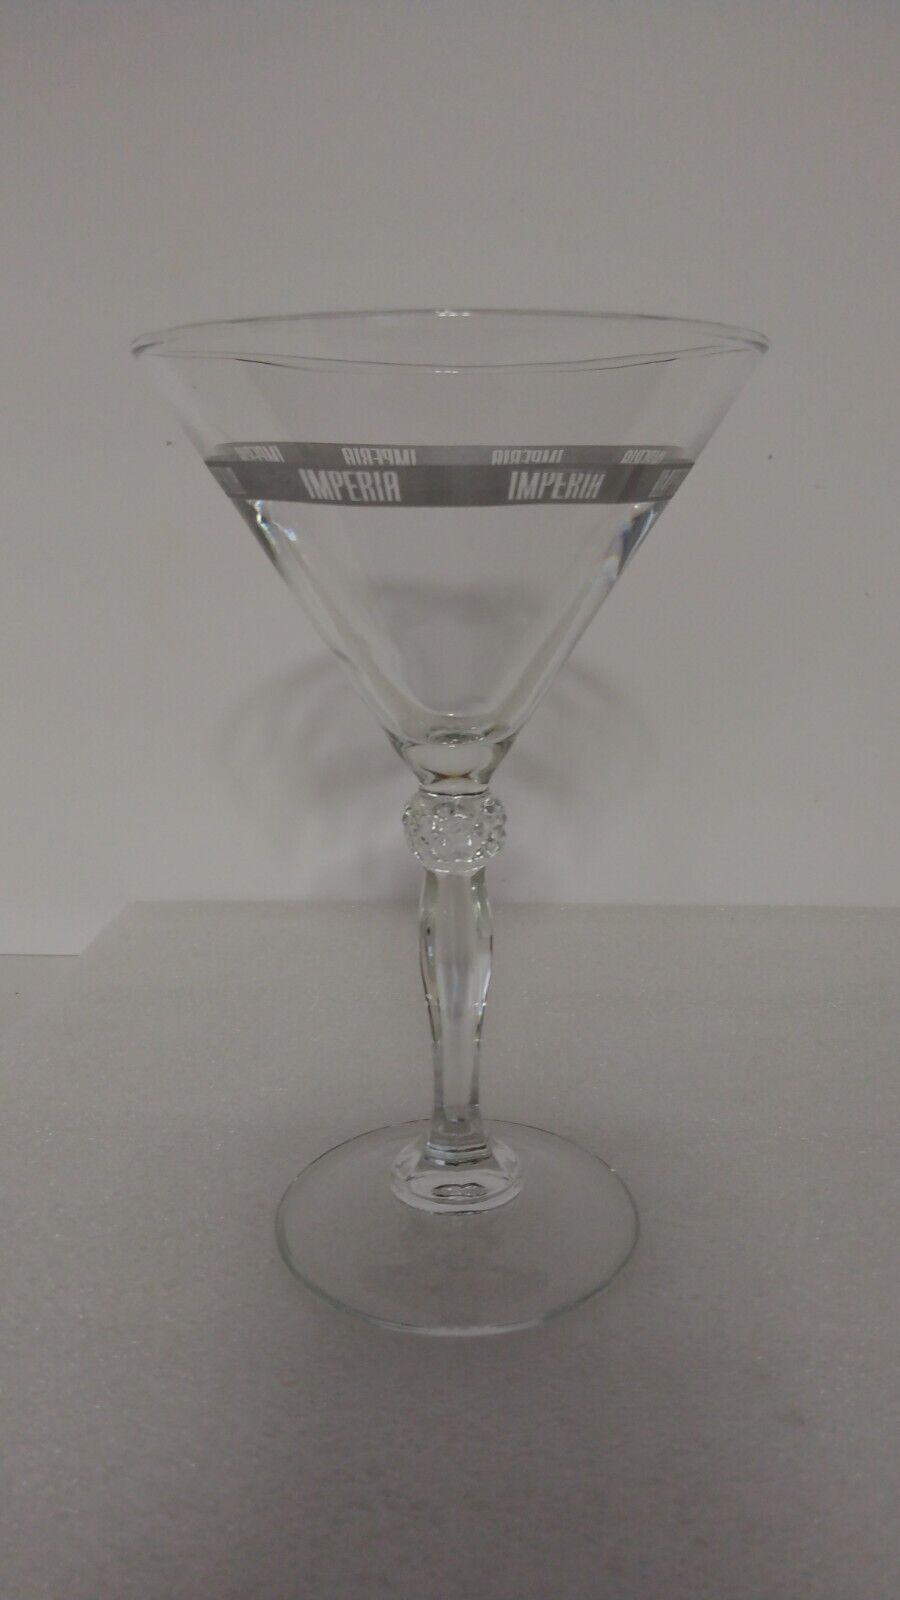 Russian Standard Super Premium Imperia Vodka Etched Logo Martini Glass Very Rare